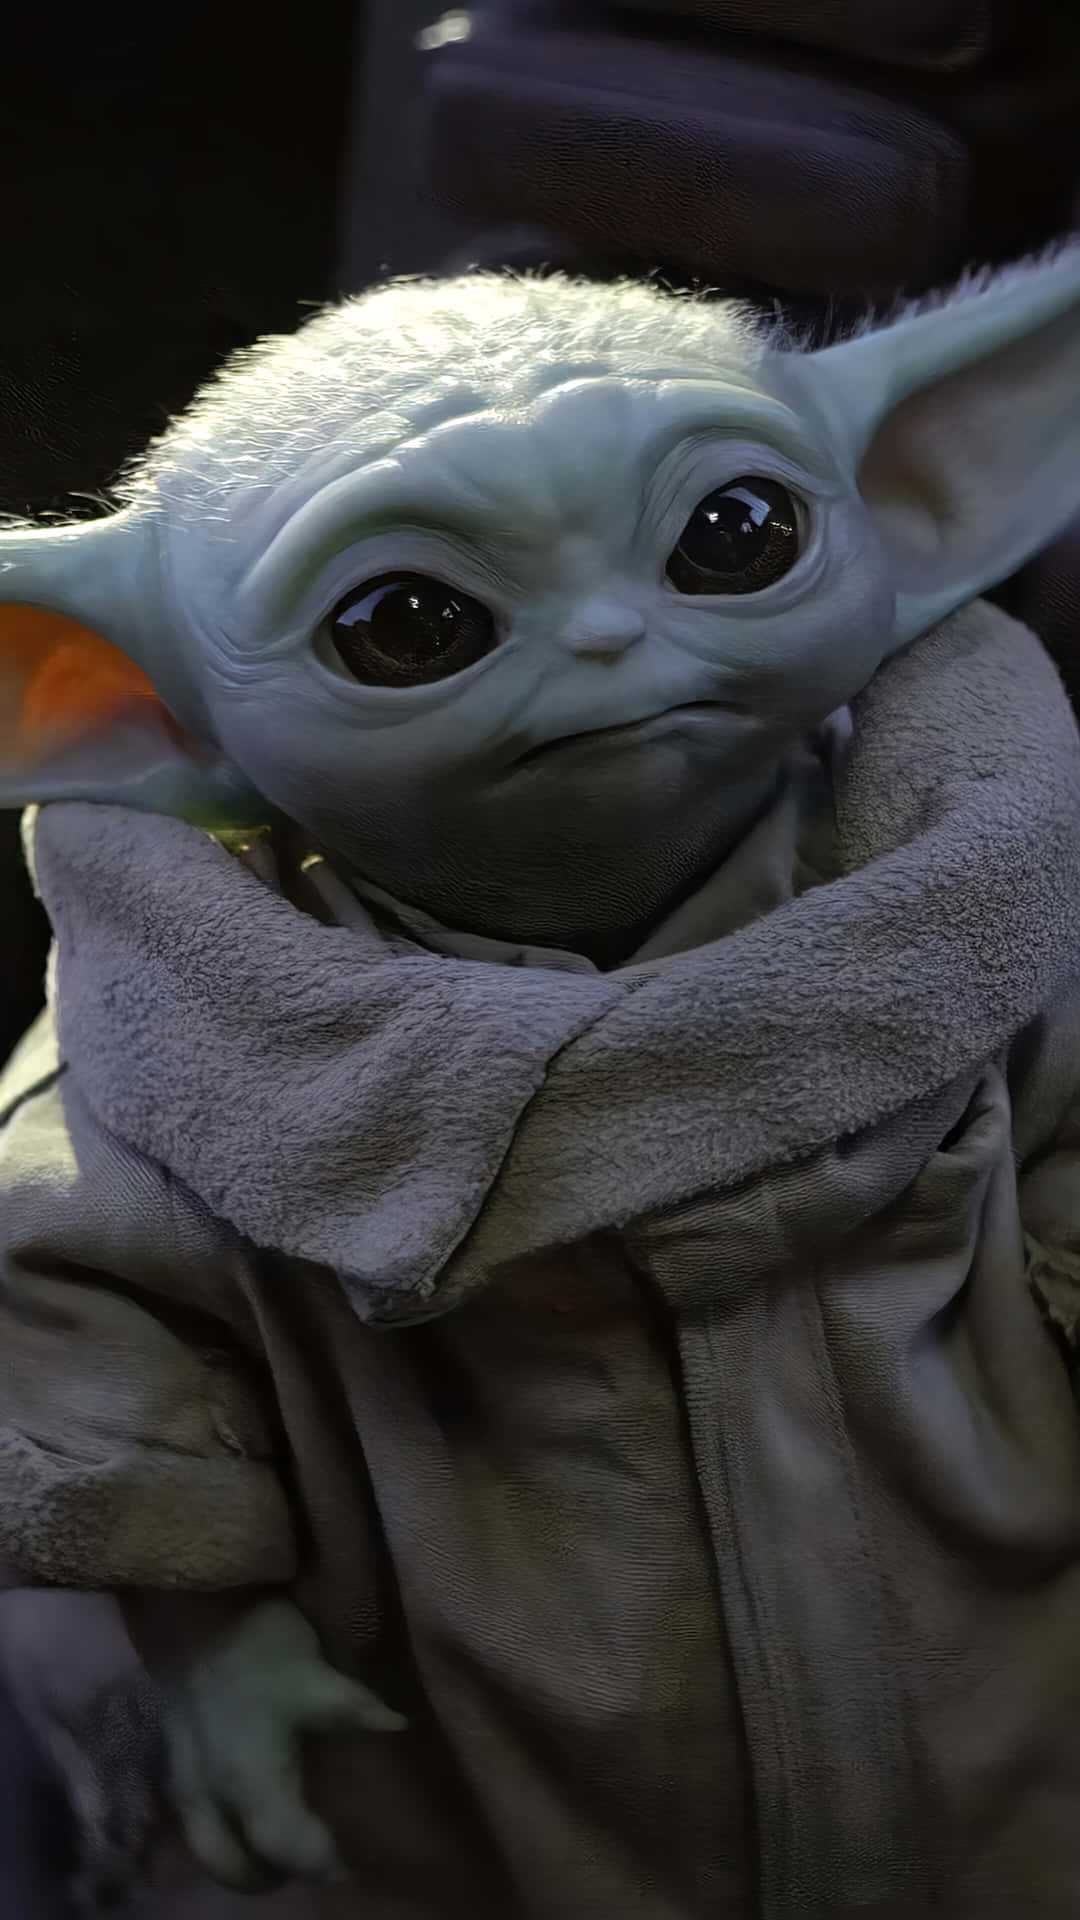 Mettilasu Nuovo Sfondo Del Tuo Cellulare: Baby Yoda! Sfondo